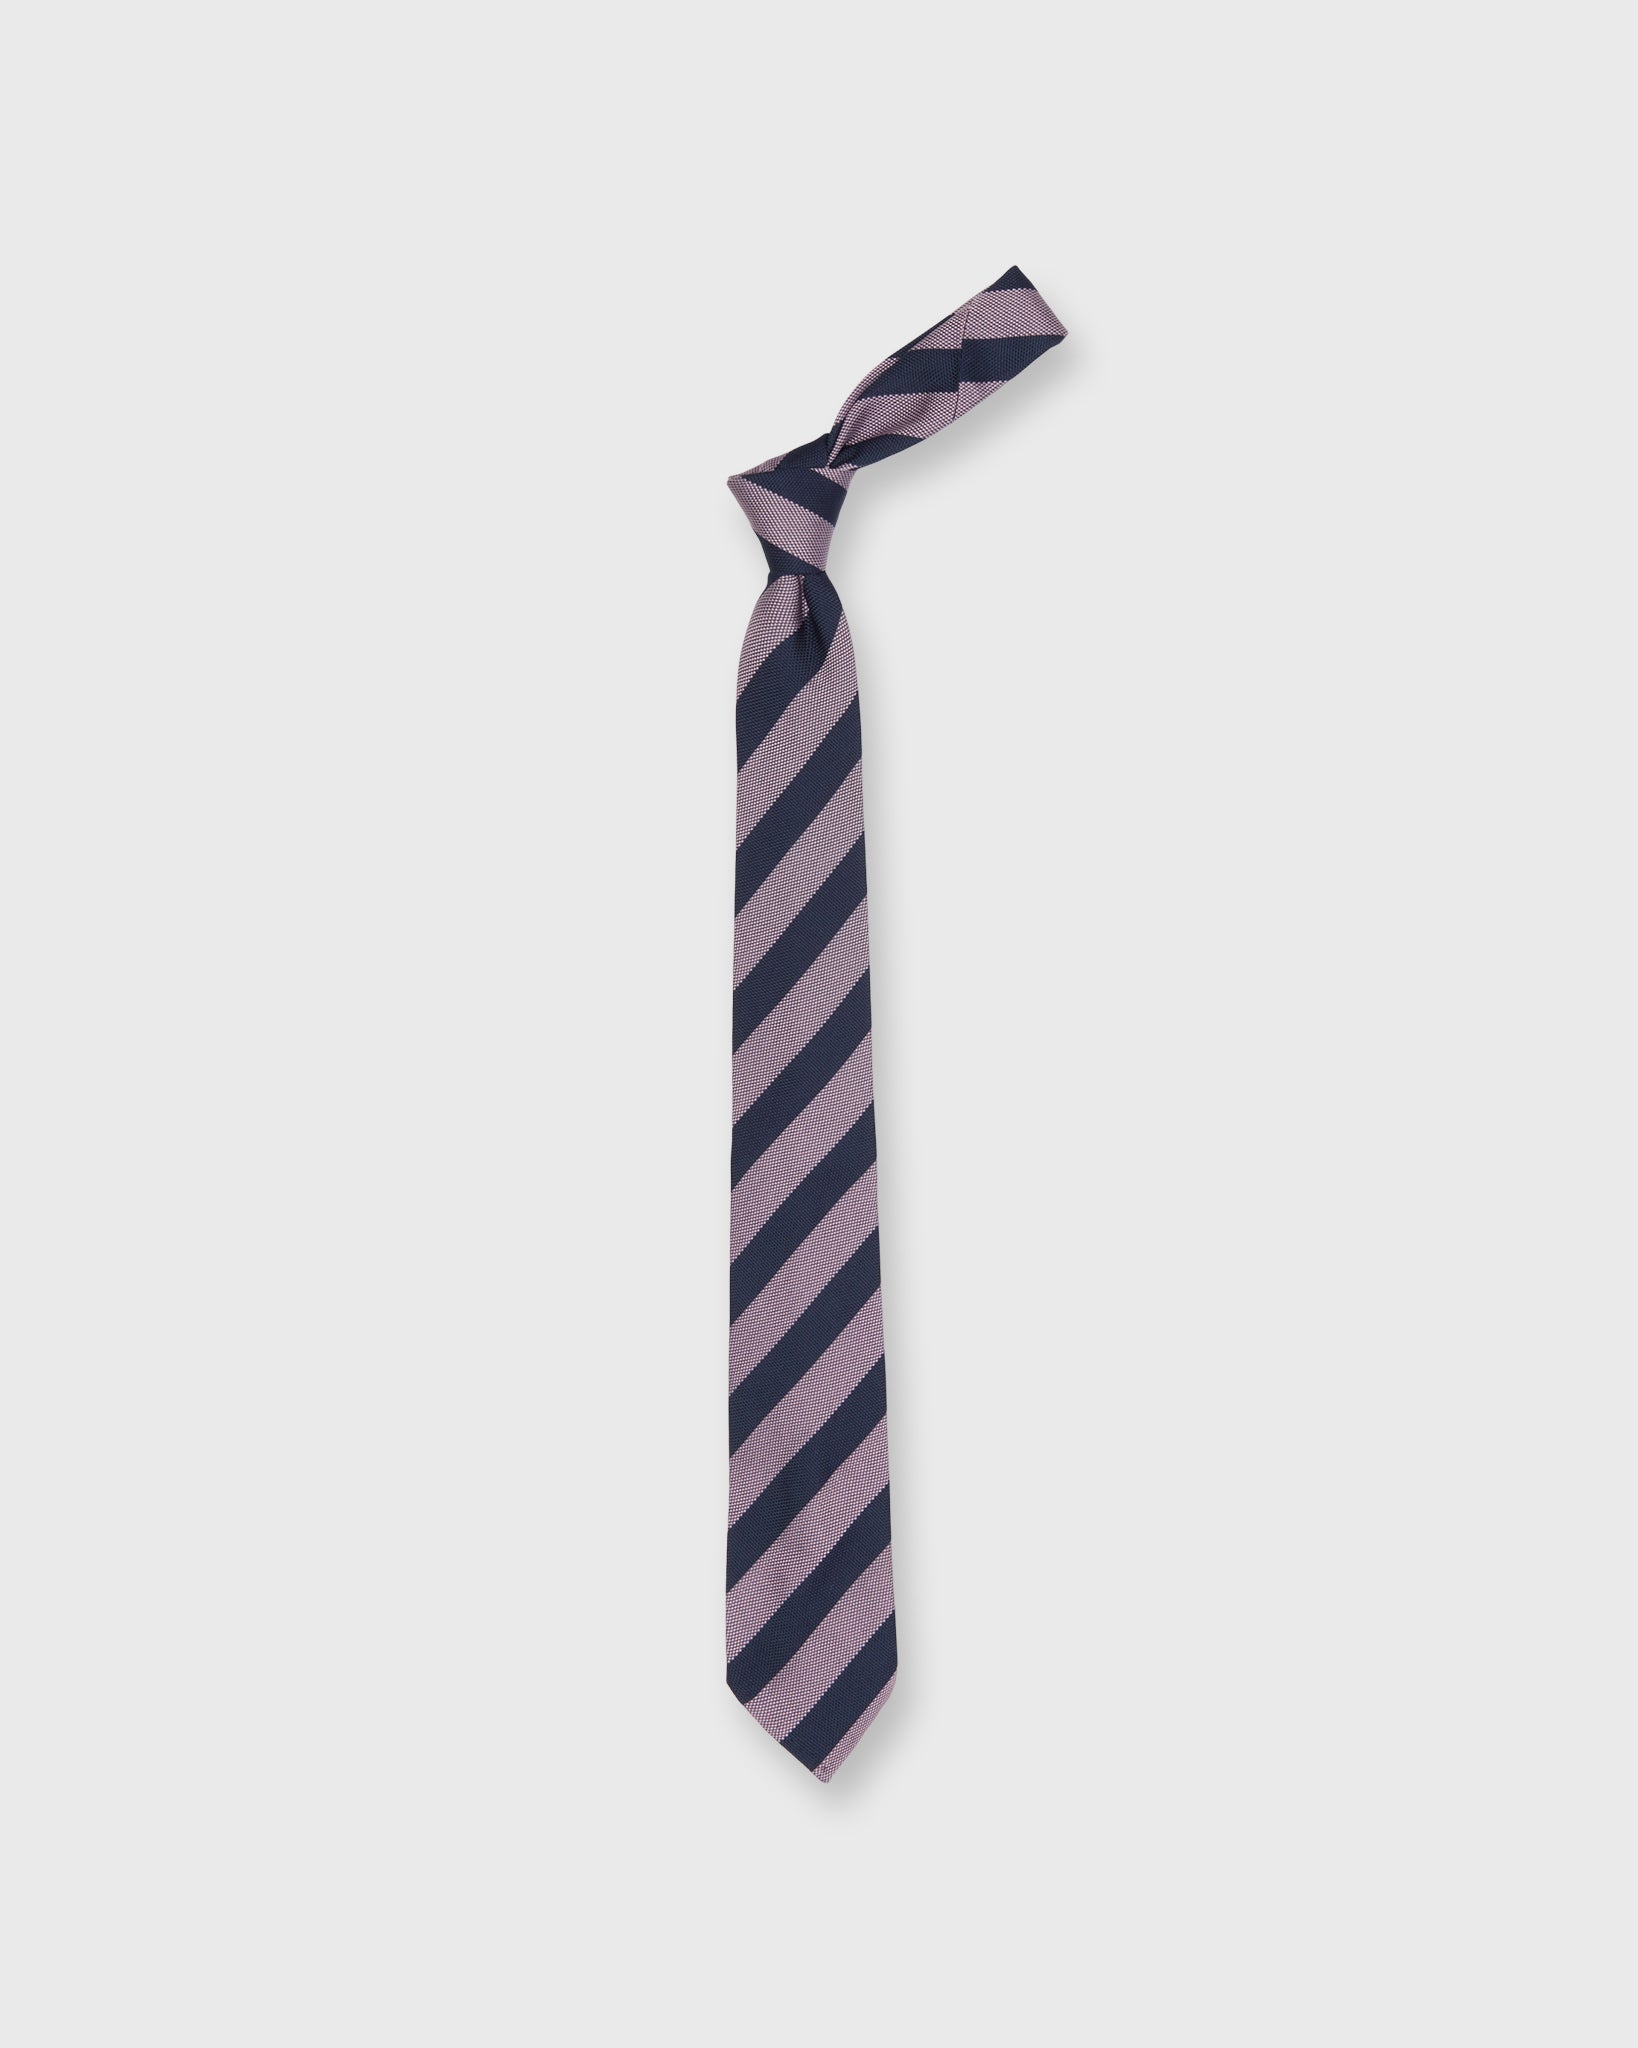 Silk Woven Tie in Navy/Pink Awning Stripe